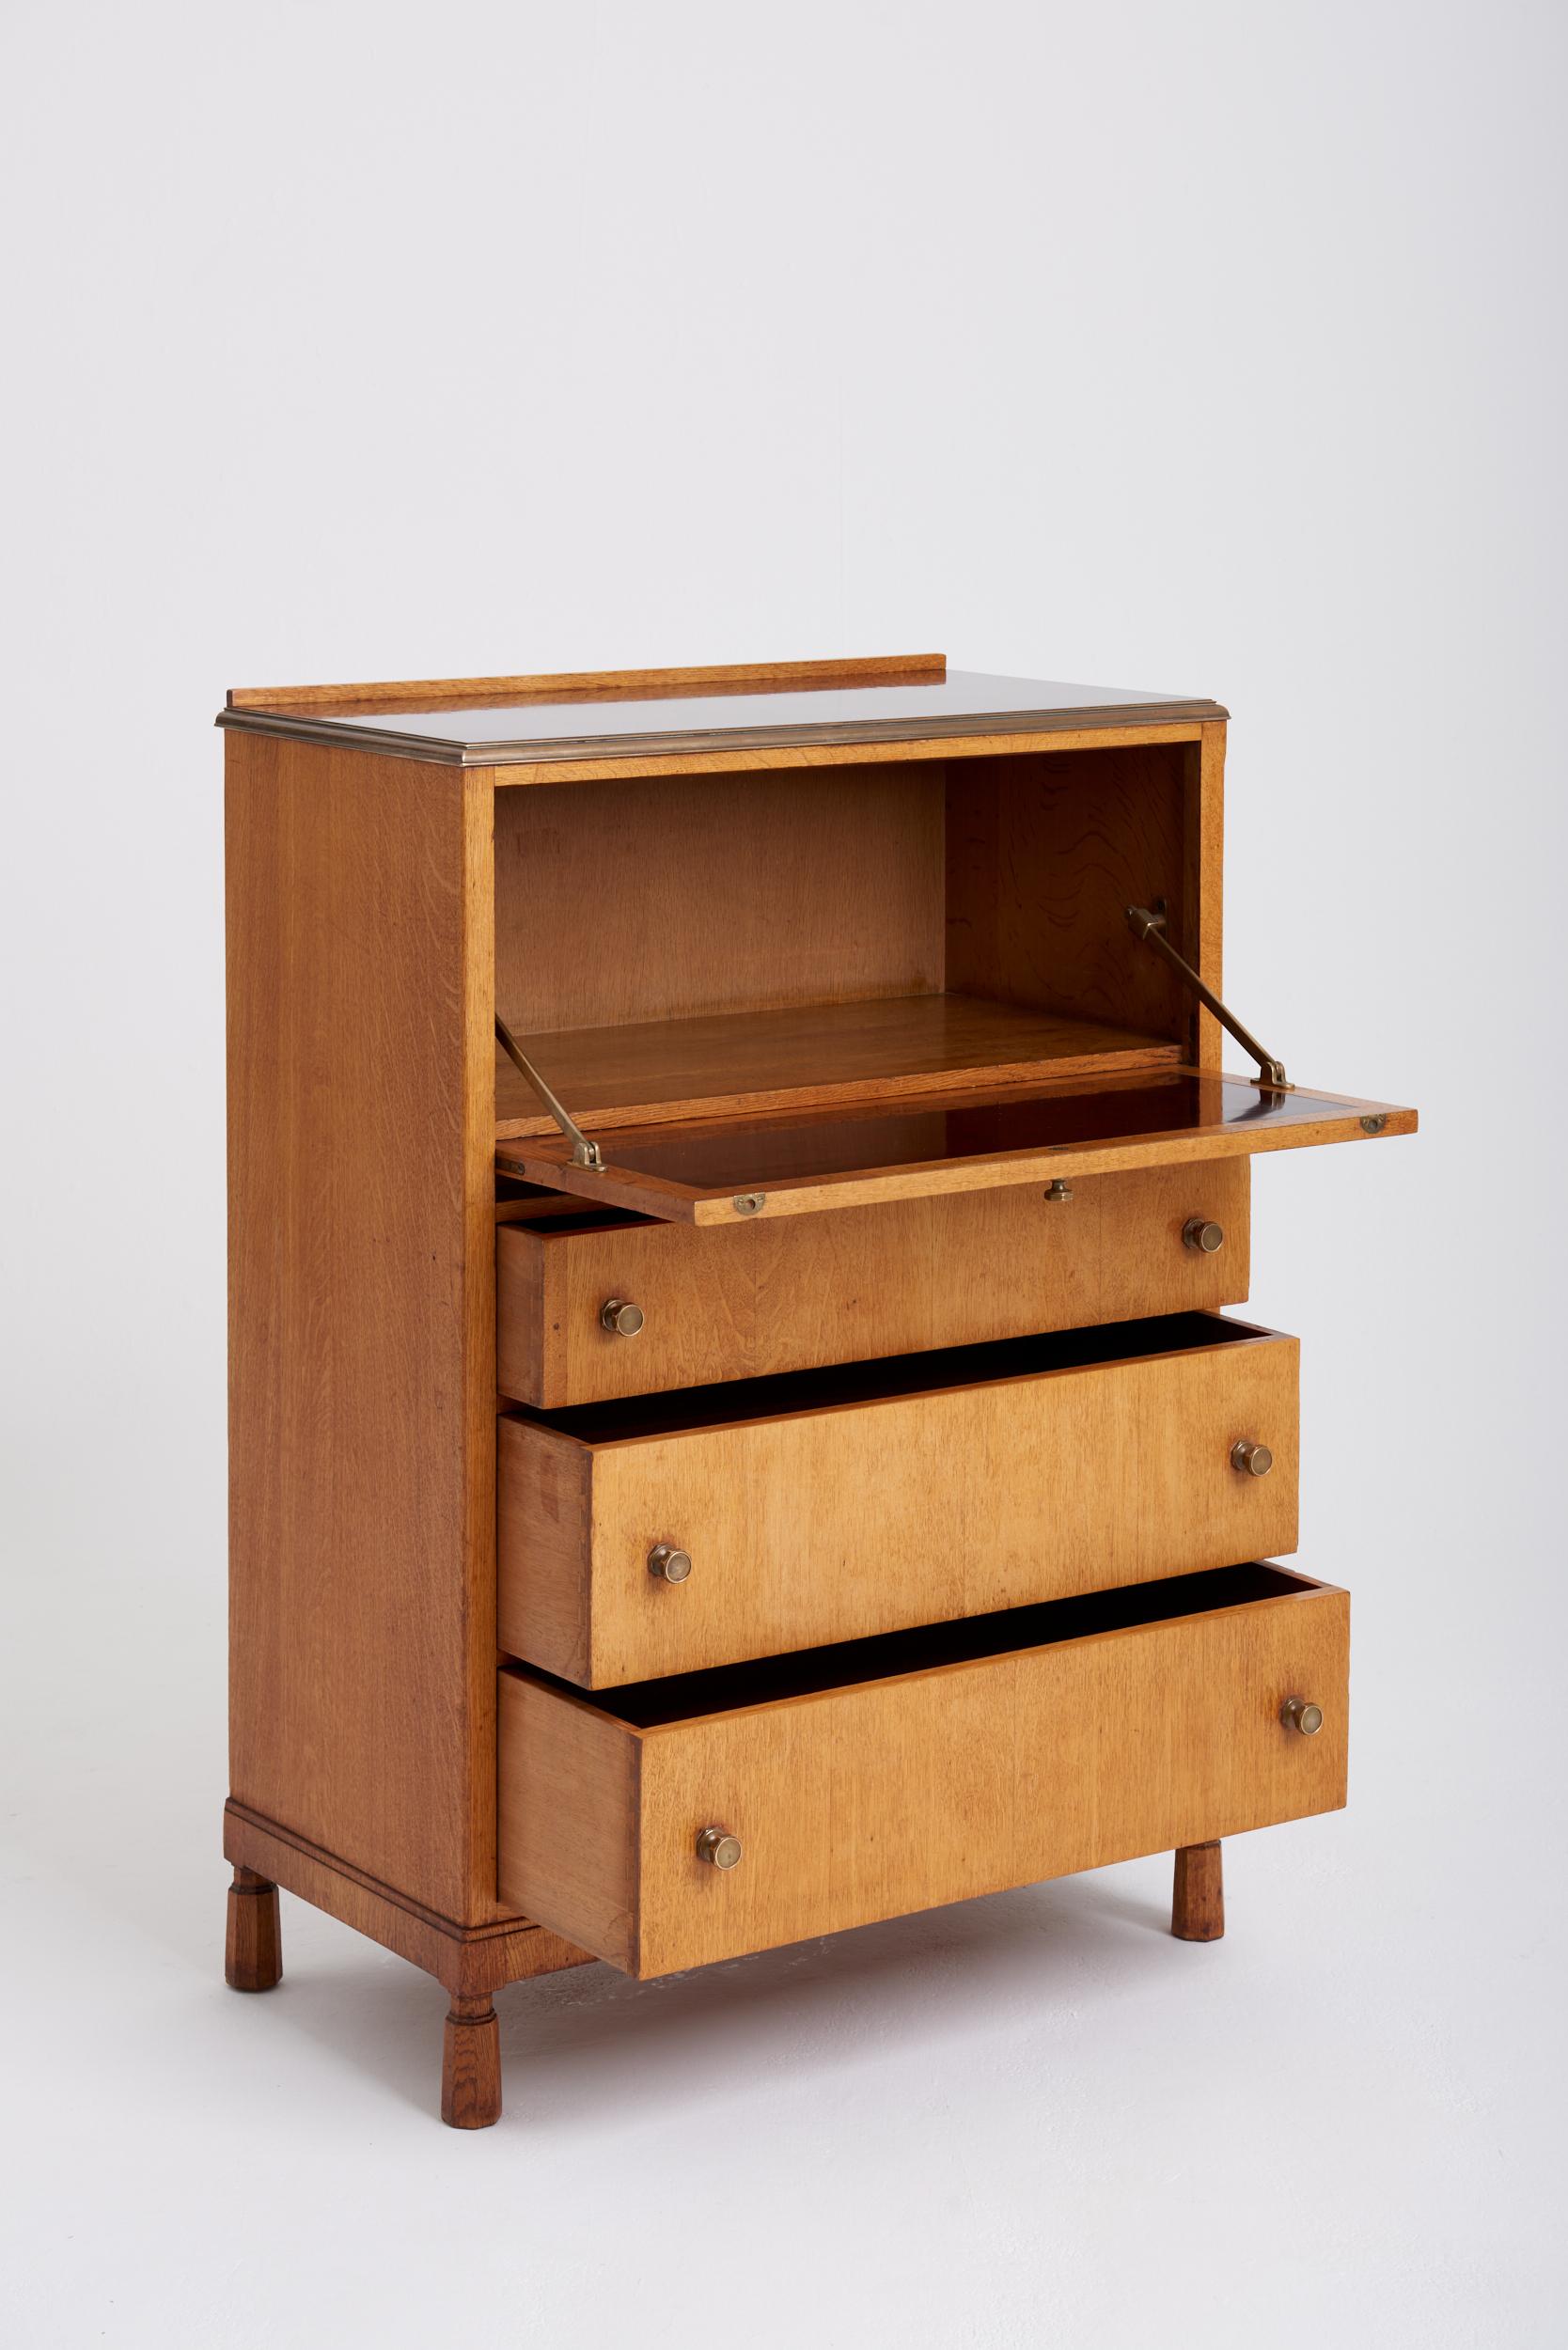 Brass Arts & Craft Oak Secretaire Cabinet by Morris of Glasgow